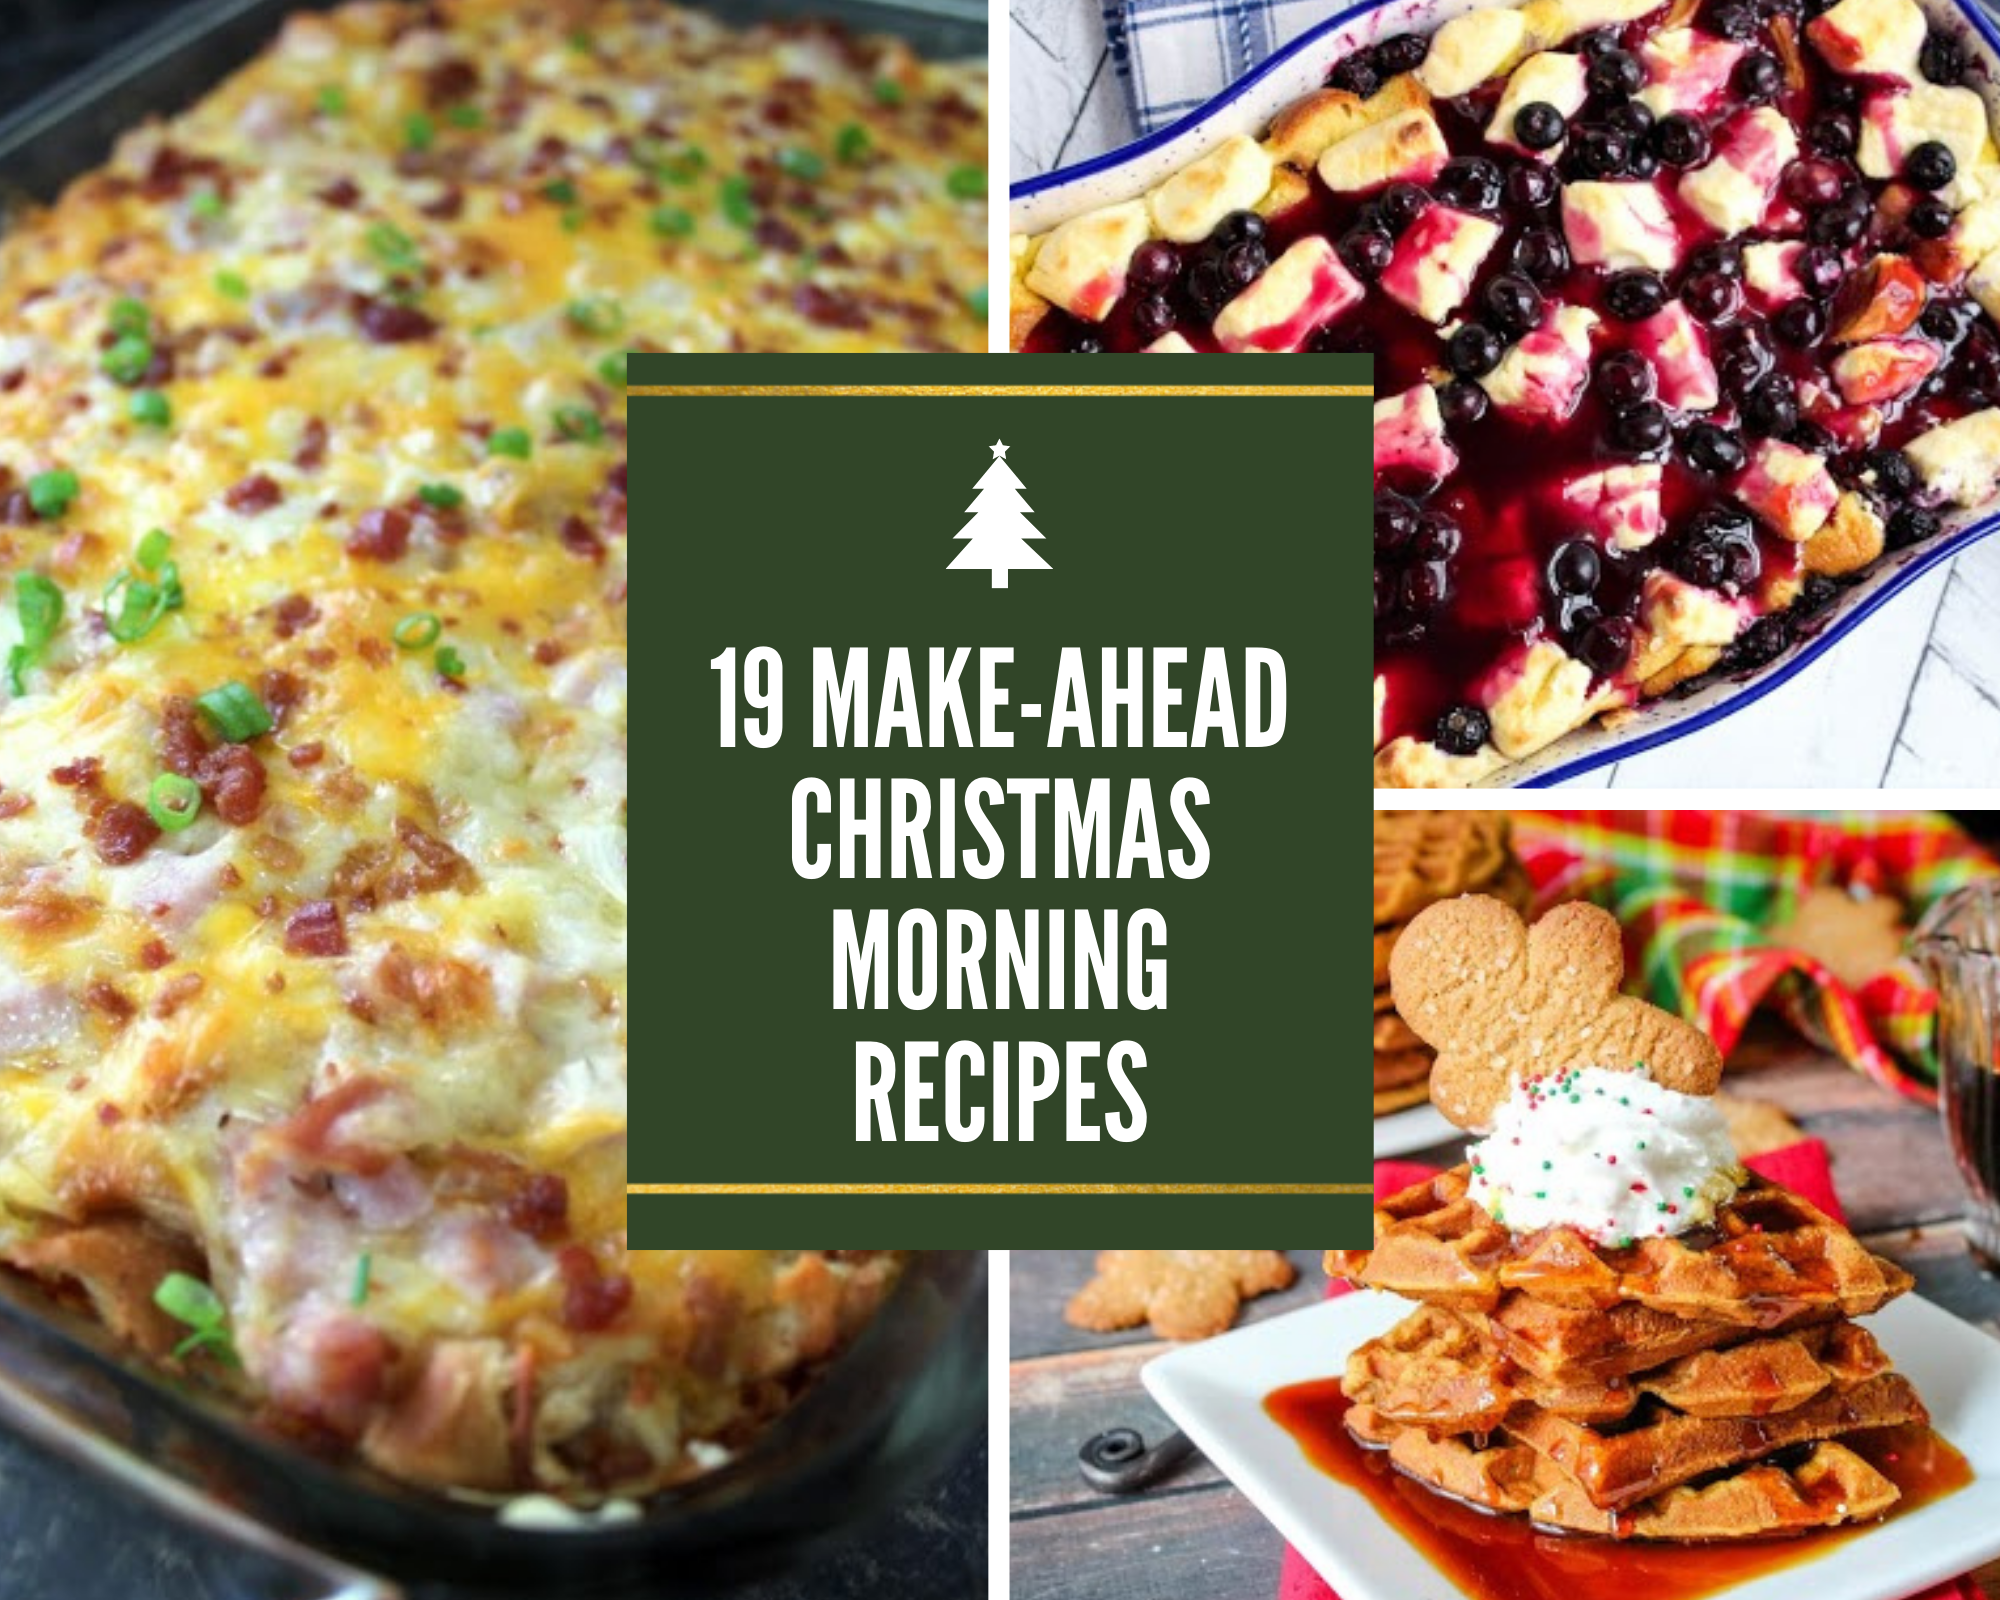 Christmas morning recipes